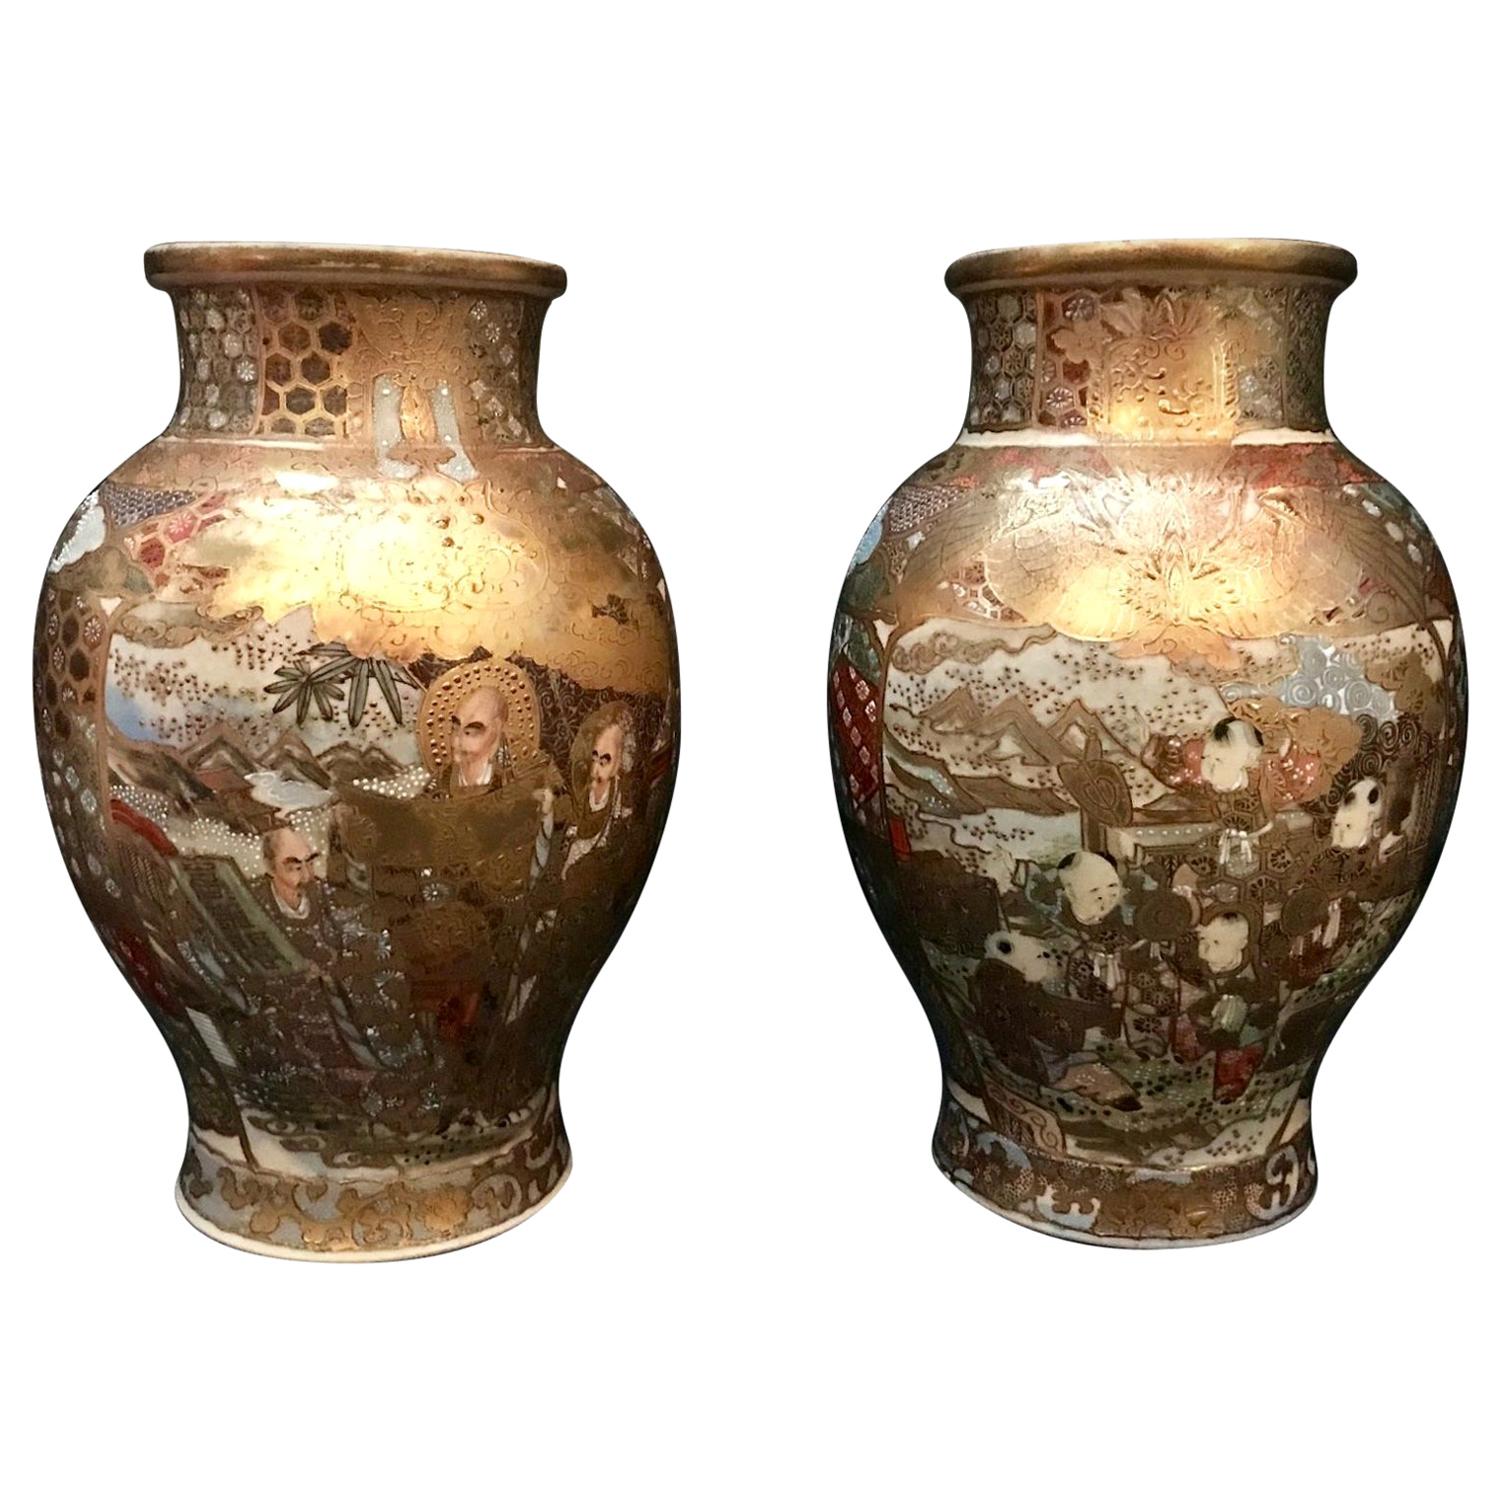 Pair of Large, Meiji Period, Japanese Satsuma Vases with Opulent Gilt